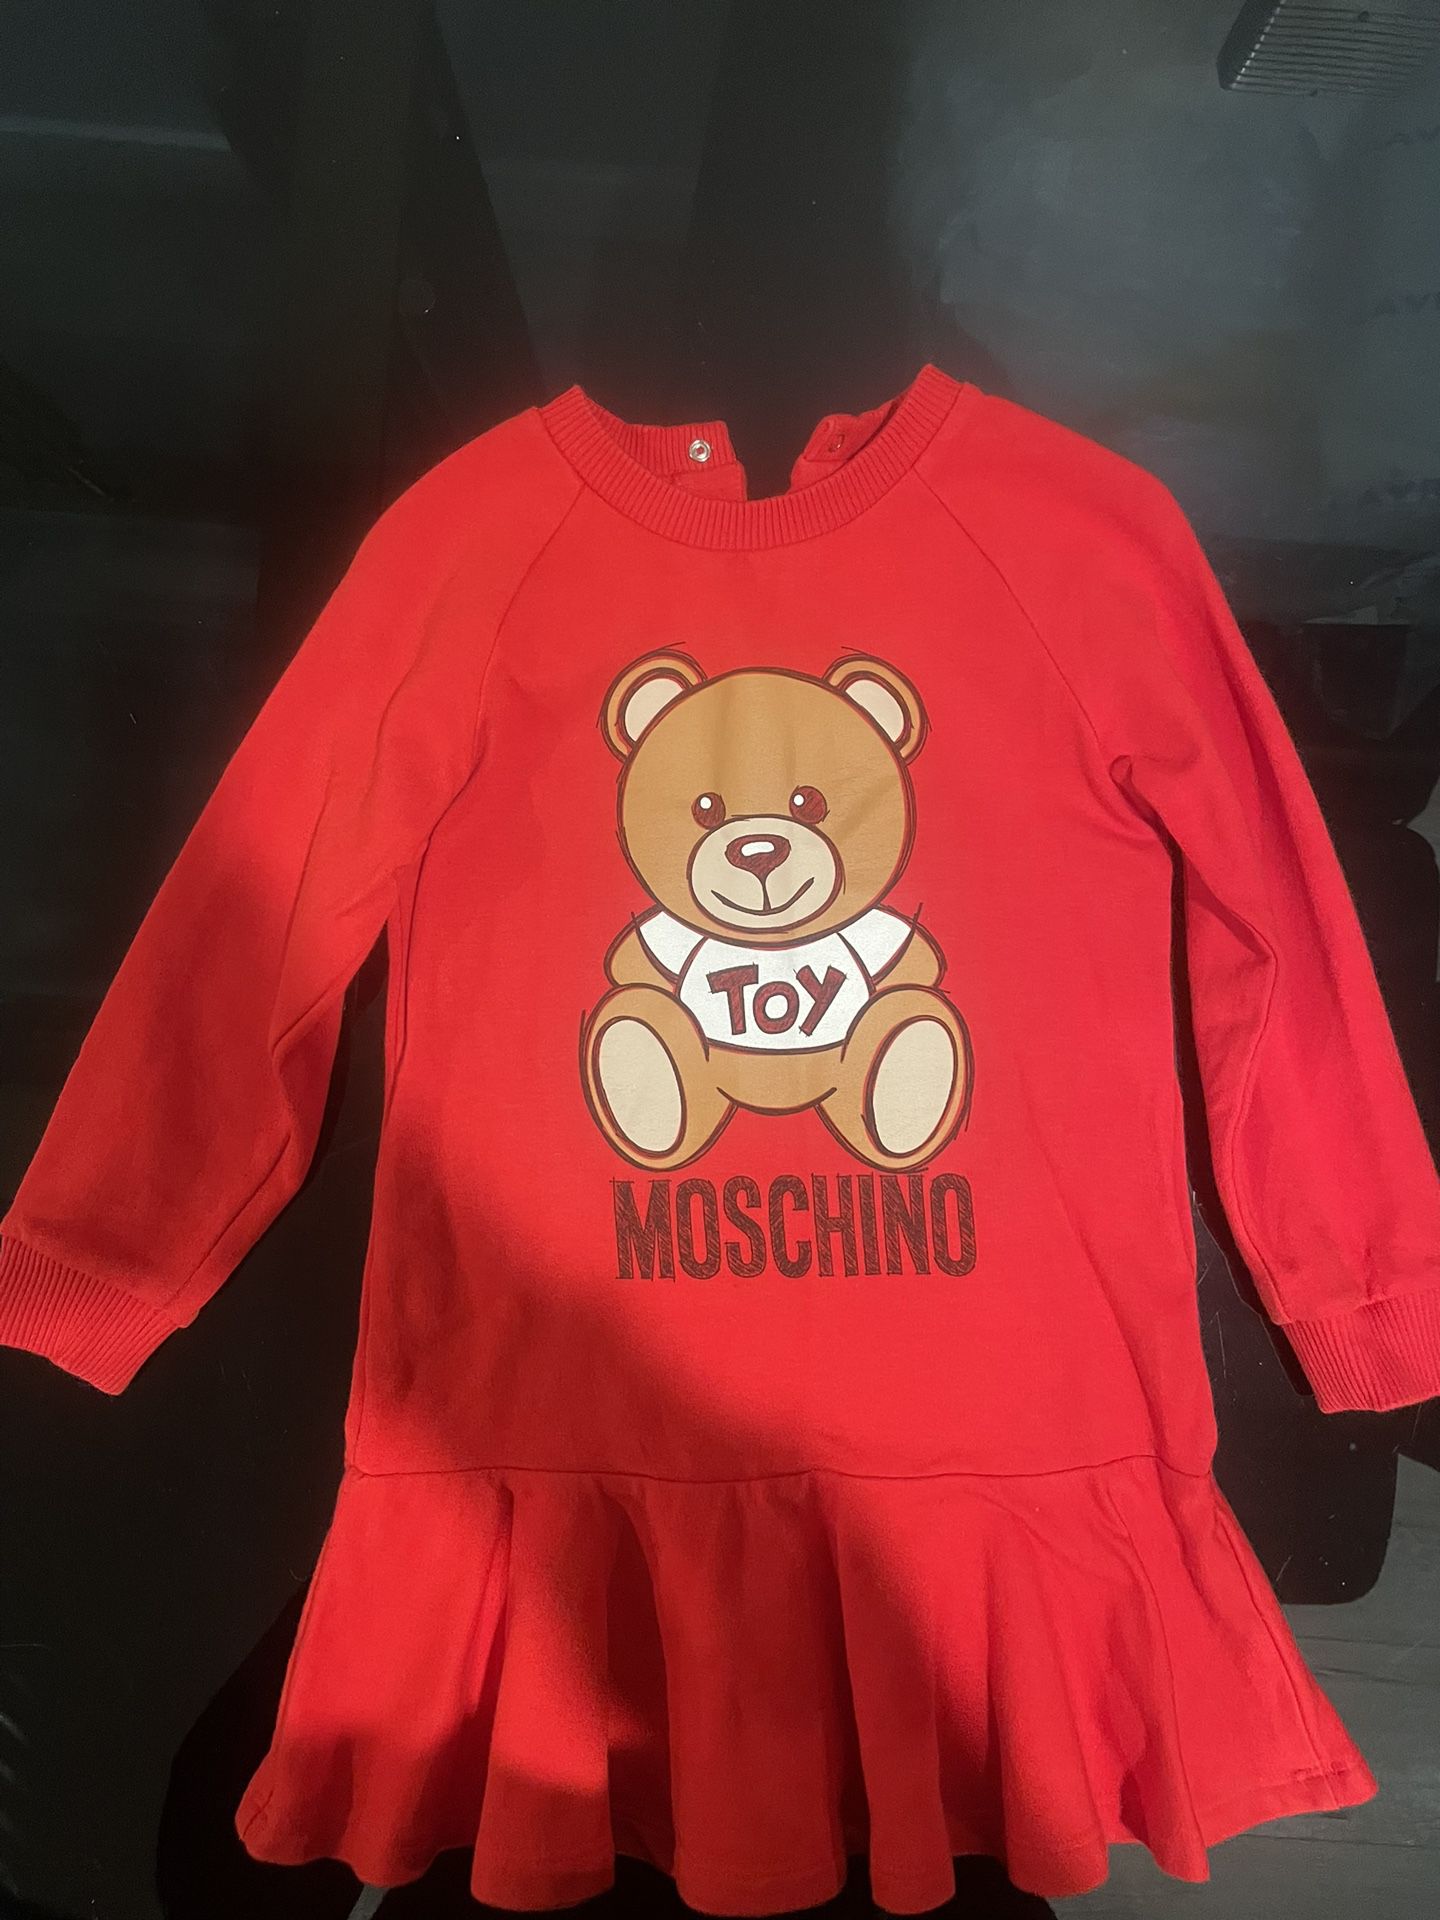 Moschino Baby Dress (18-24 months) $50